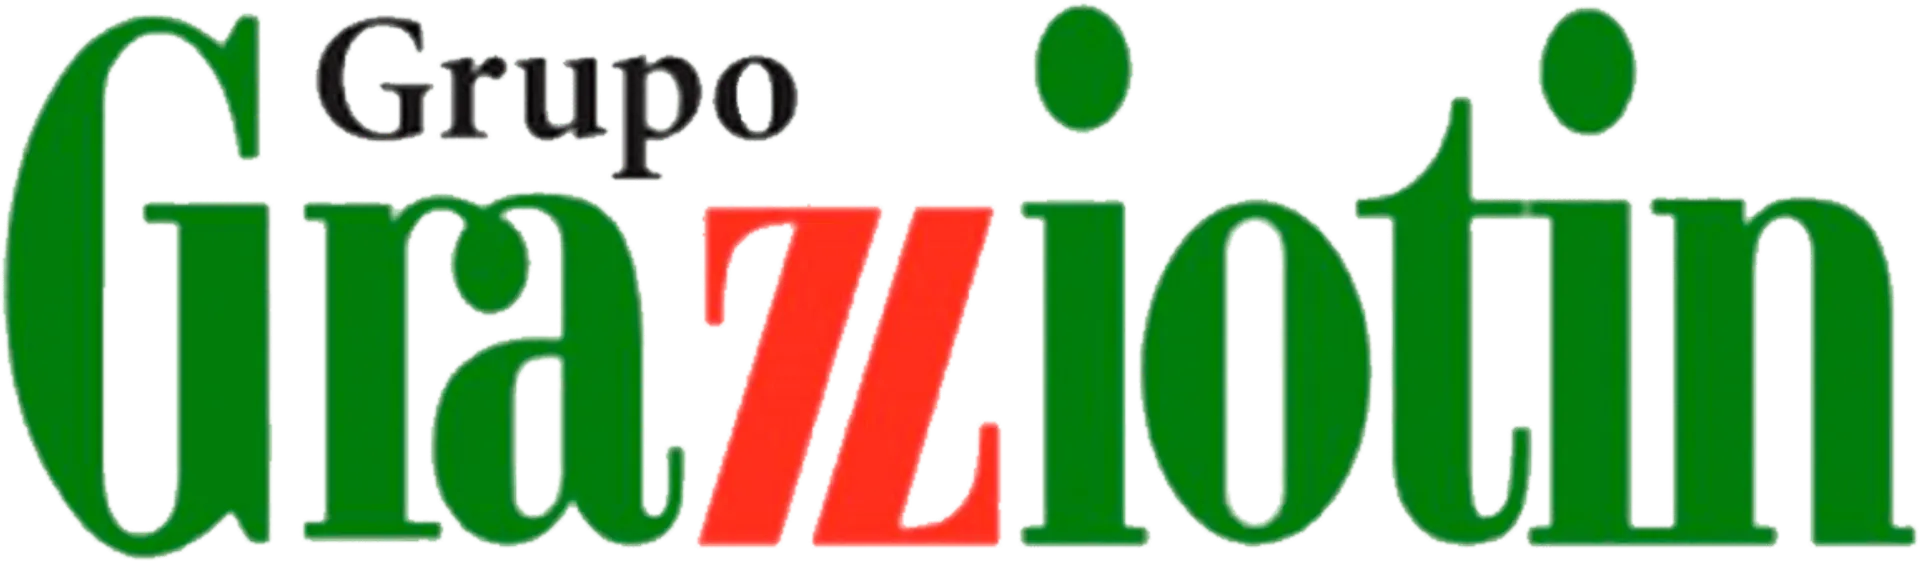 GRAZZIOTIN logo